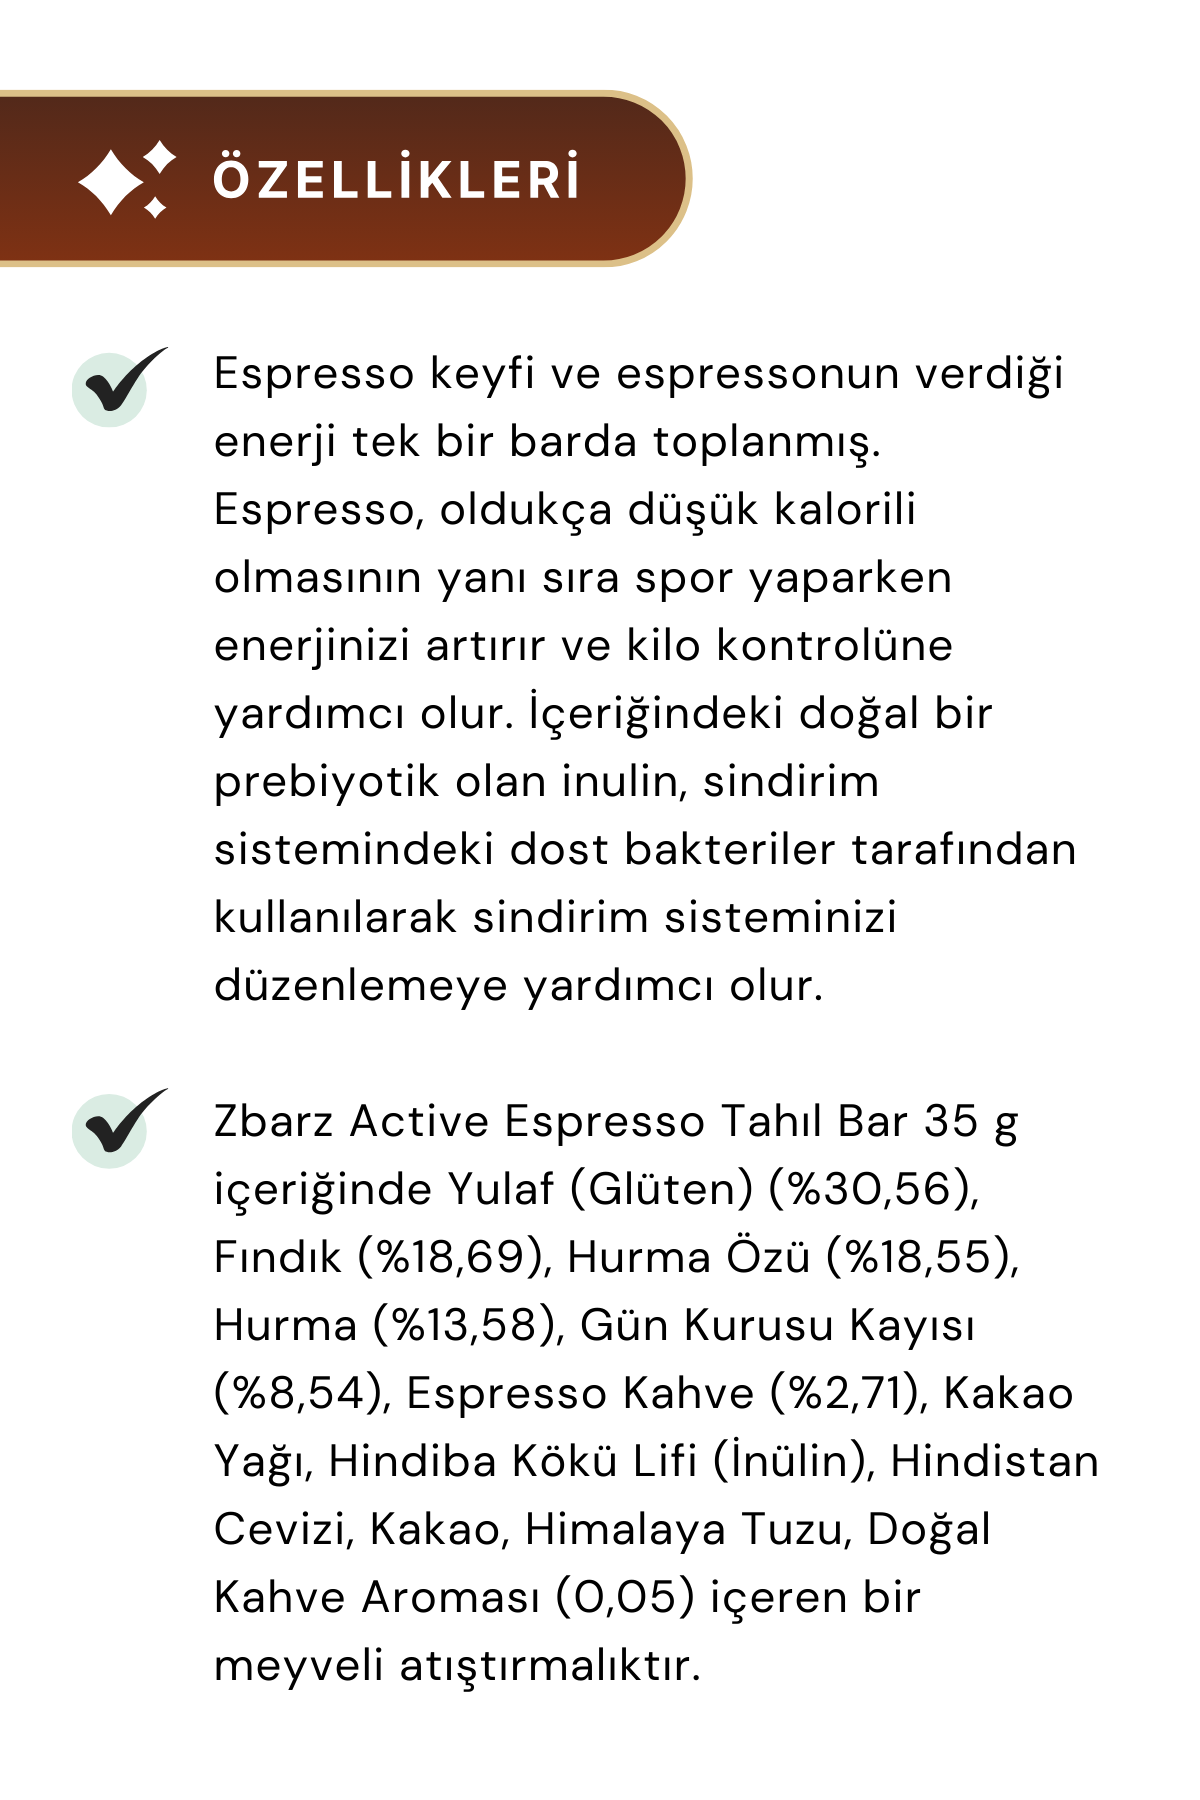 Zbarz Active Espresso Tahıl Bar 35 g 12'li Paket